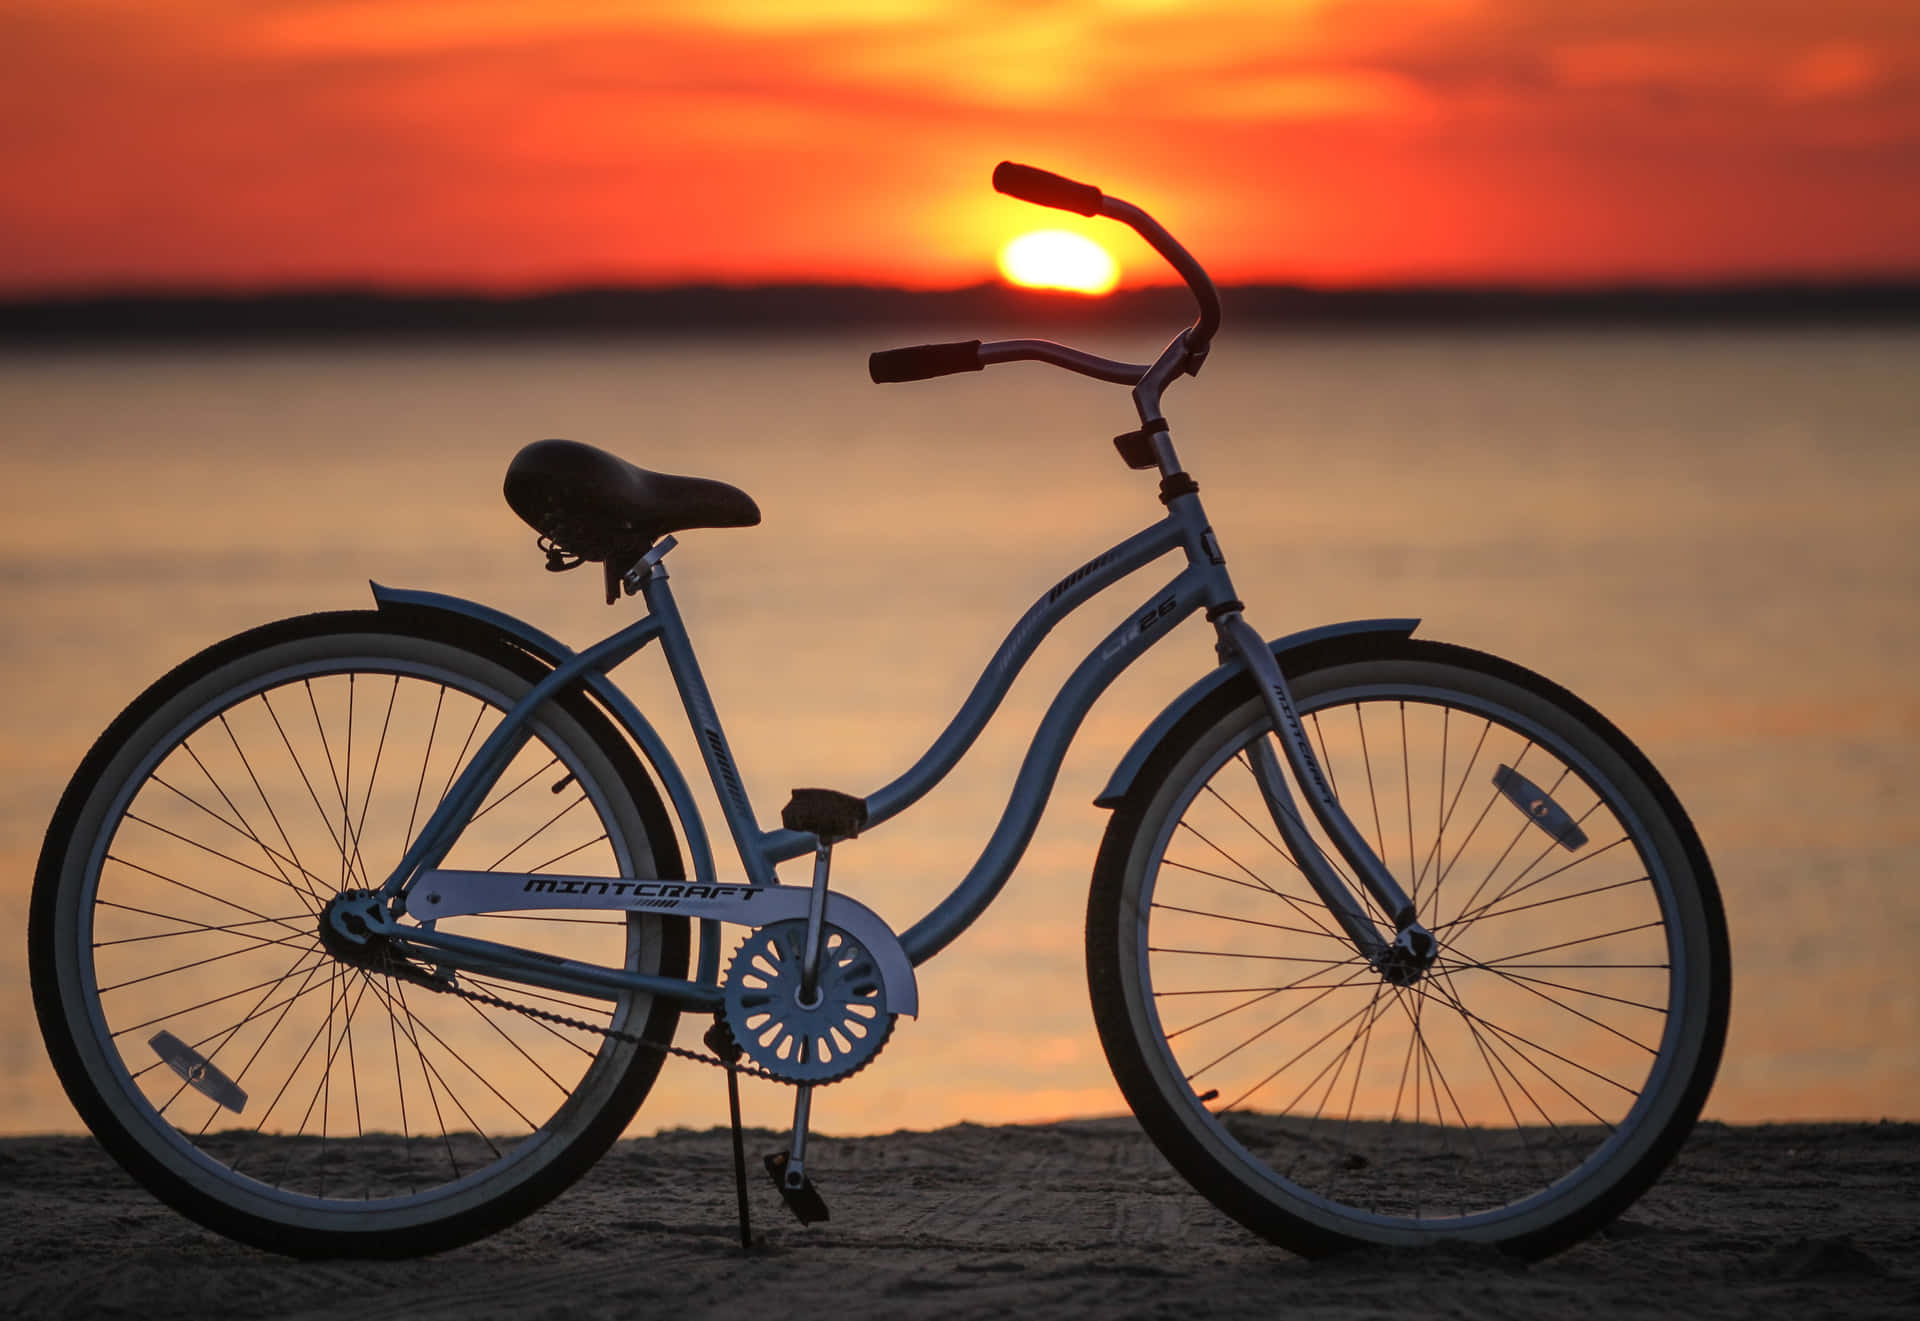 A vibrant beach cruiser bicycle on a sandy beach. Wallpaper